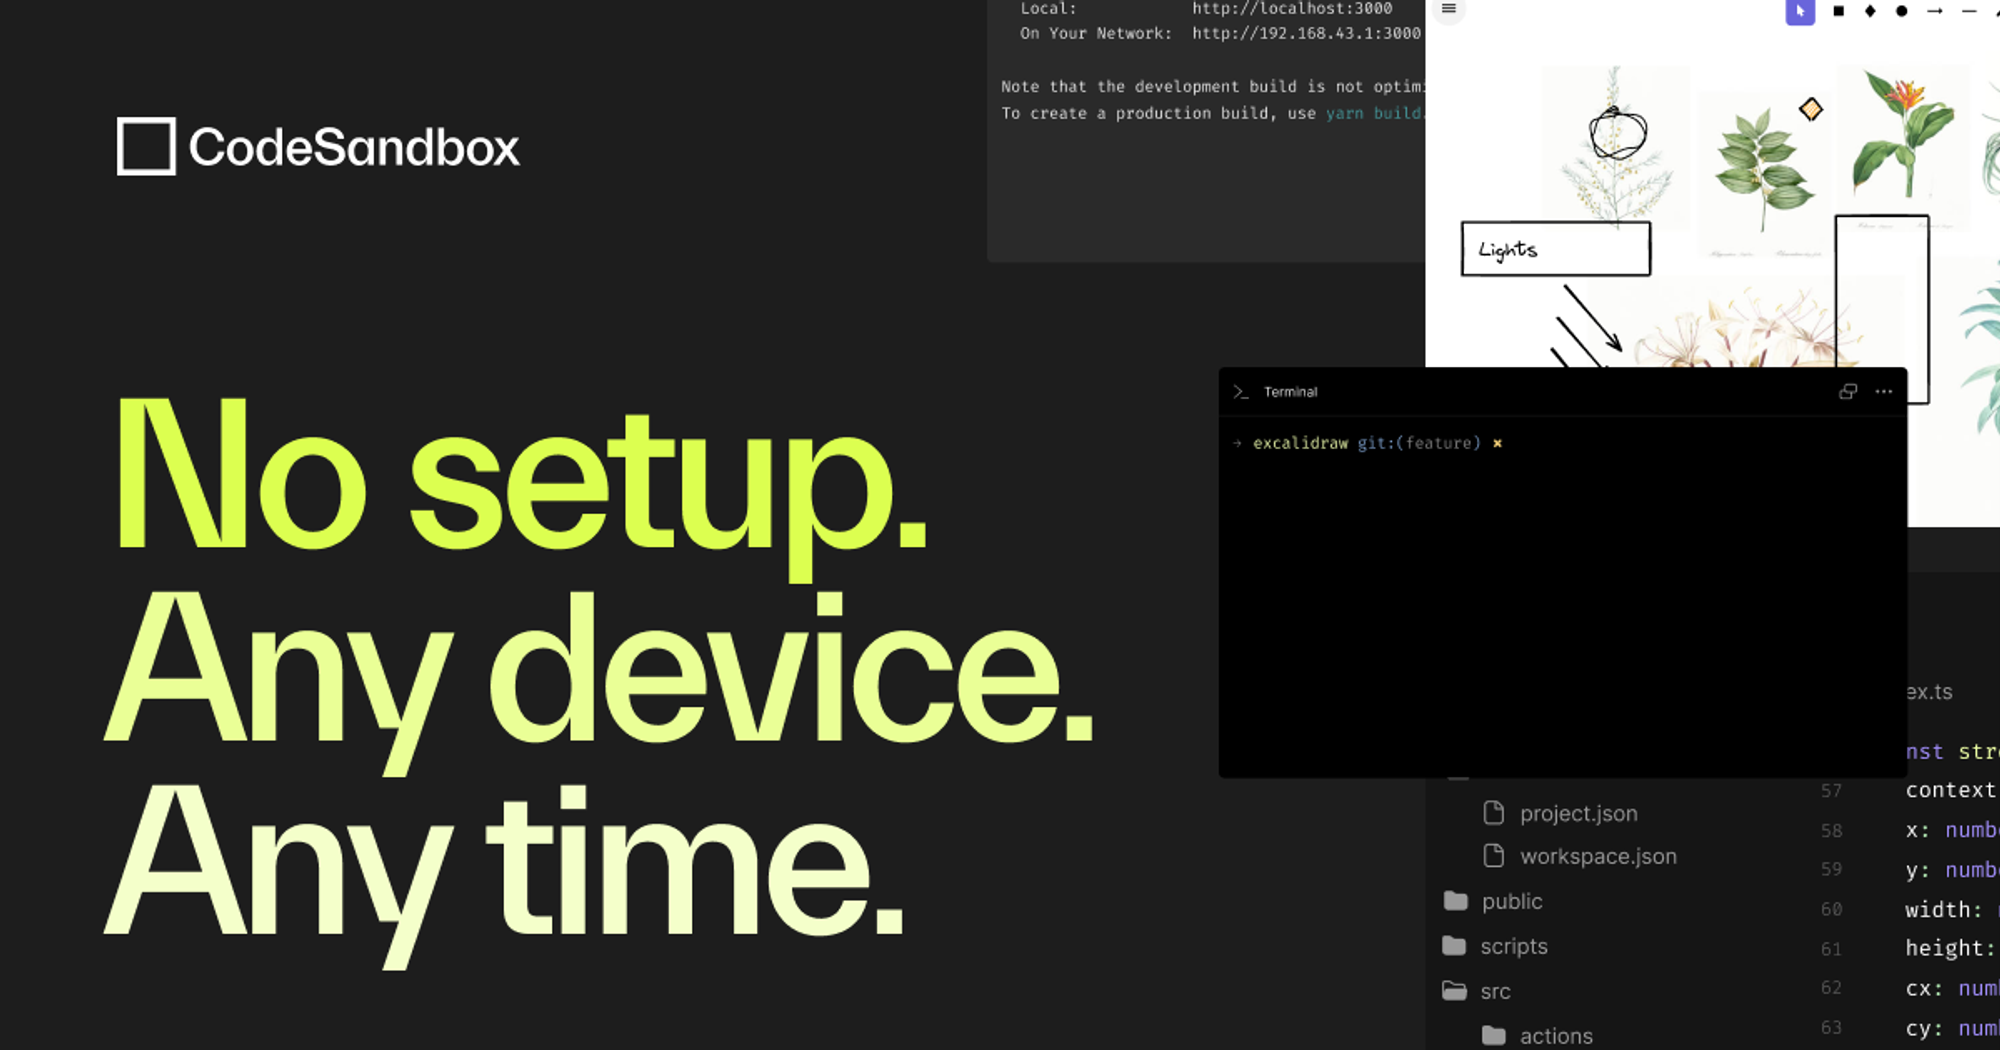 CodeSandbox: Online Code Editor and IDE for Rapid Web Development